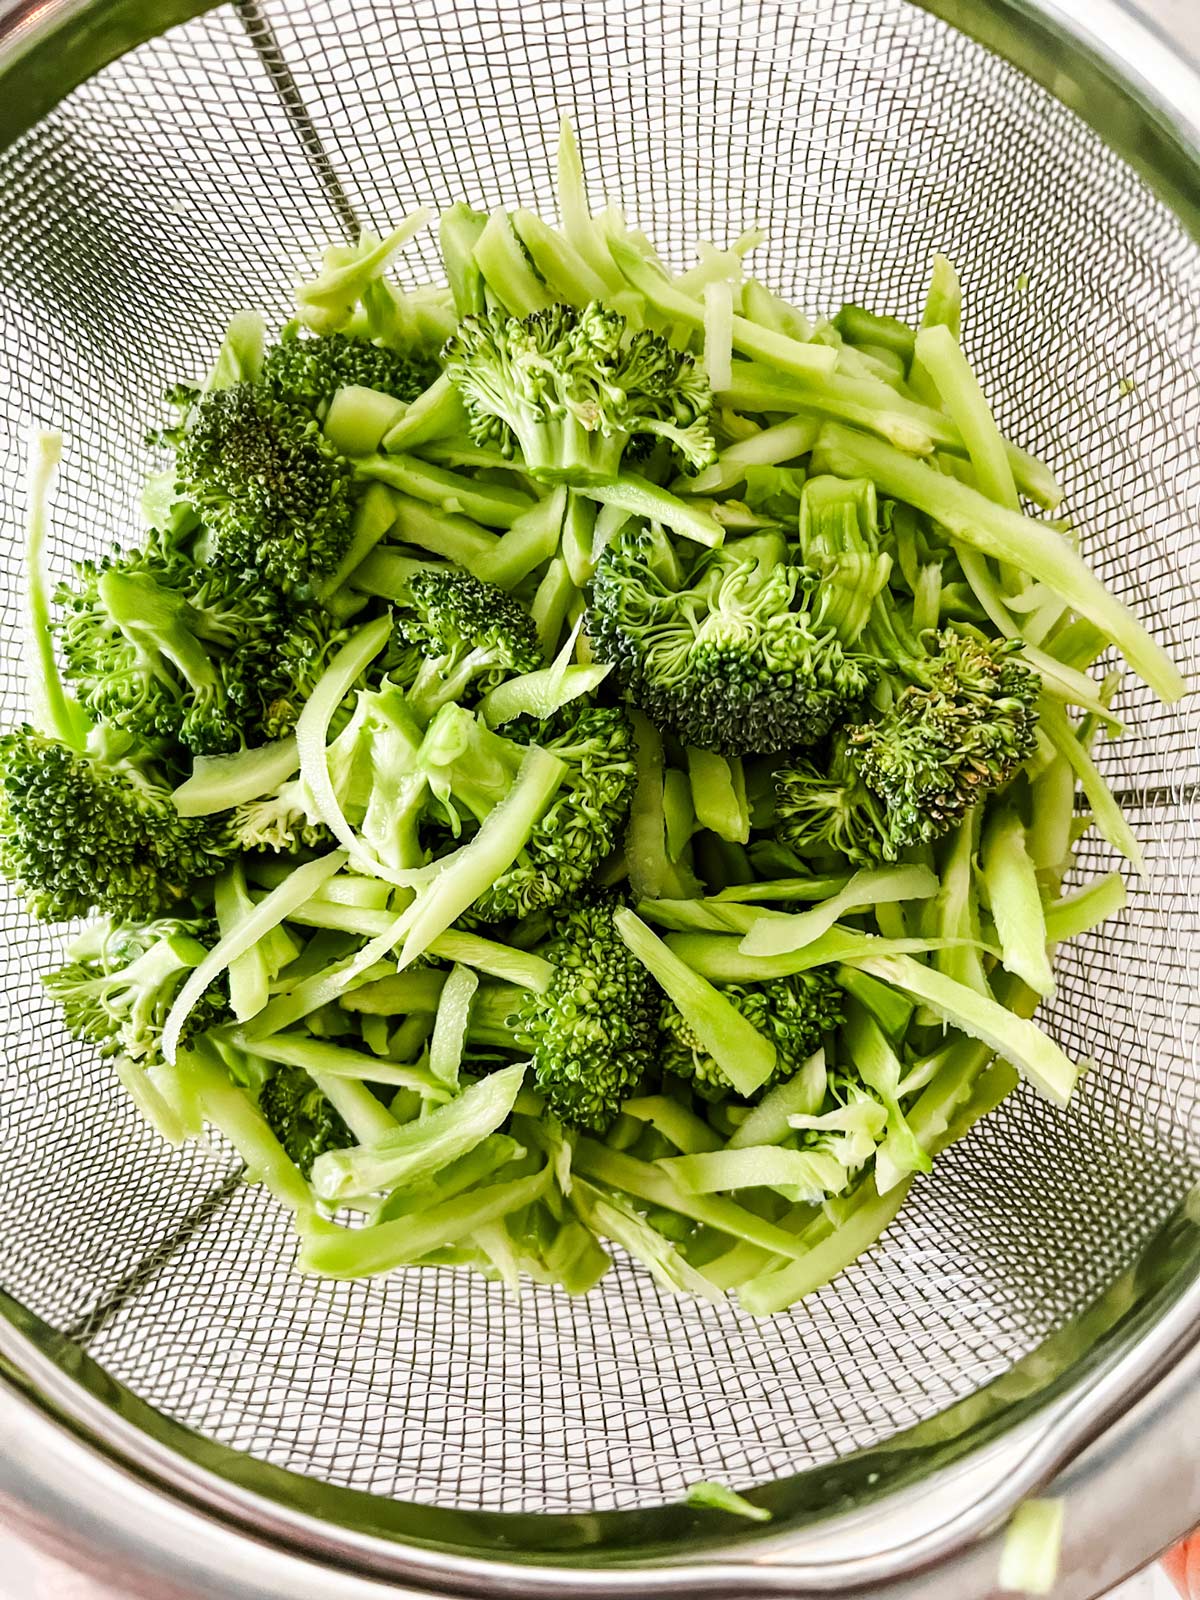 Photo of broccoli and shredded broccoli stems in a steamer basket.